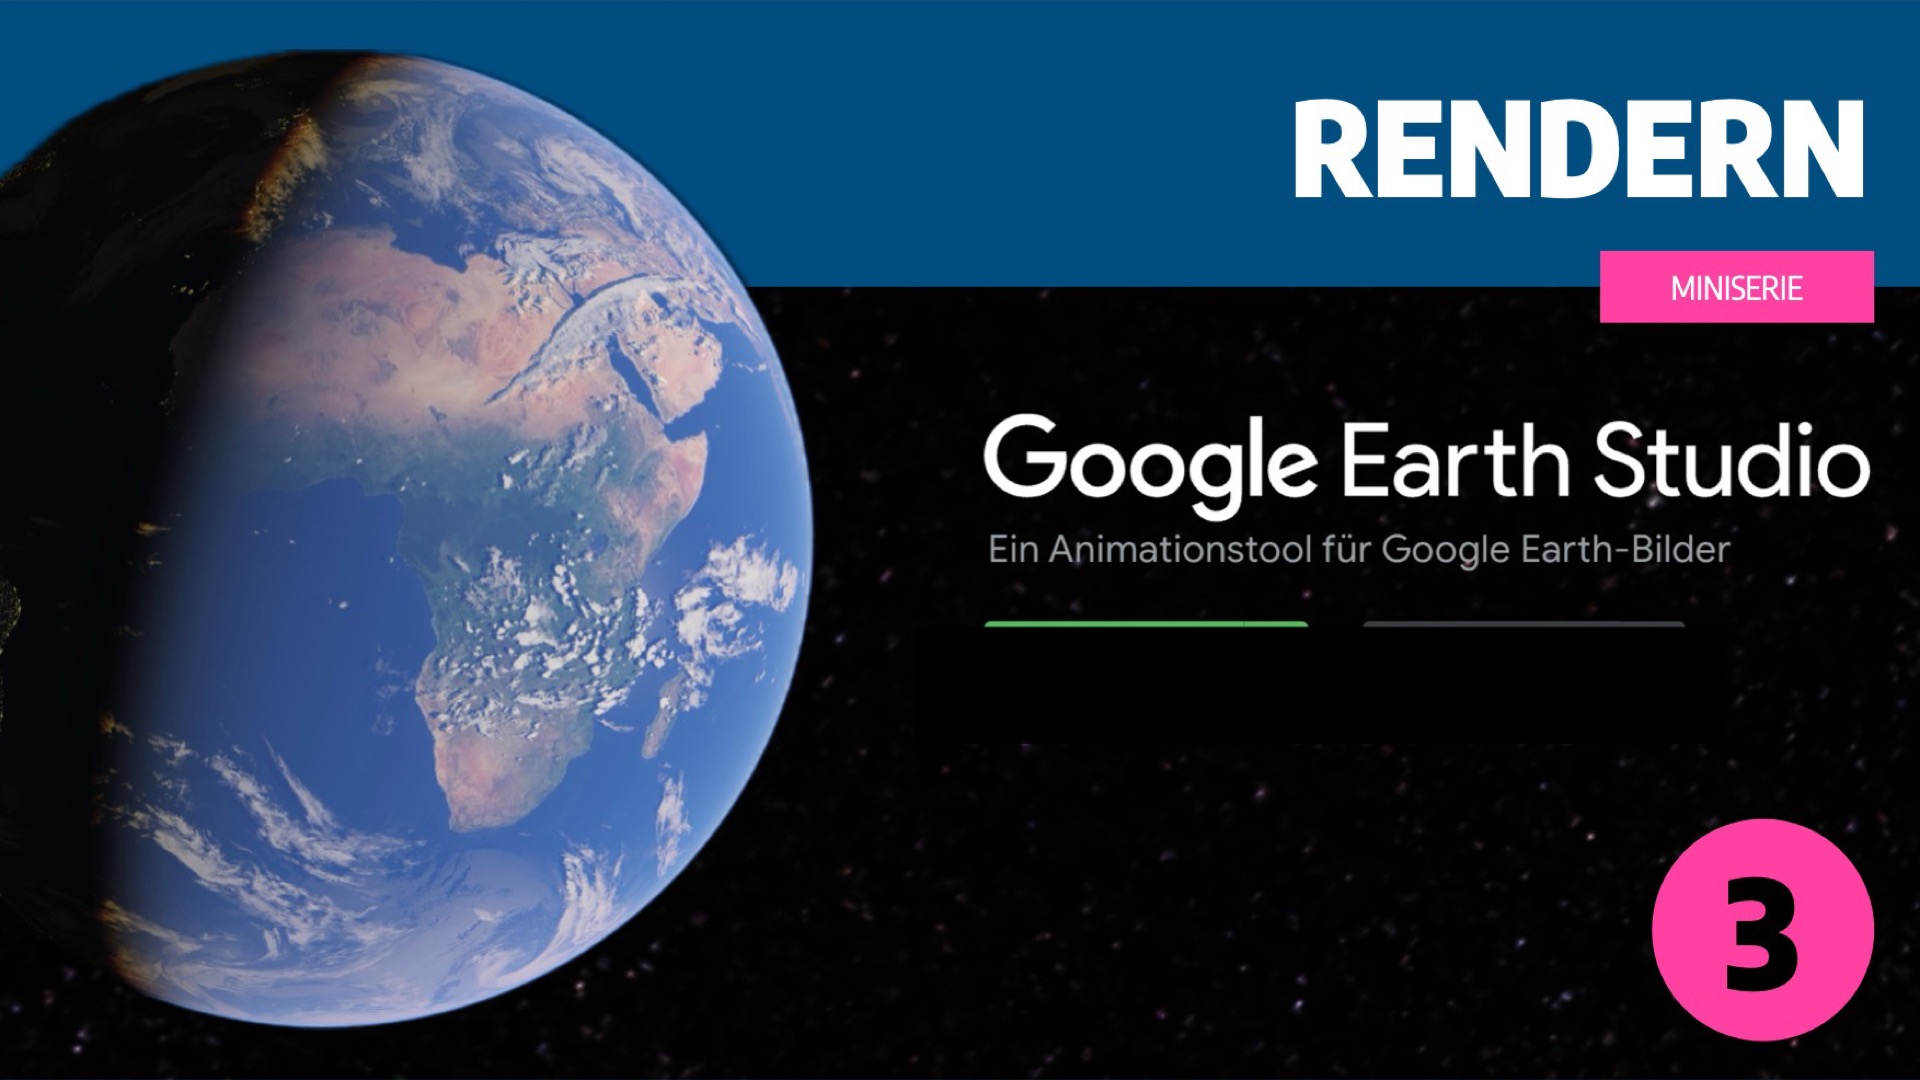 Image for Google Earth Studio - Teil 3: Rendern